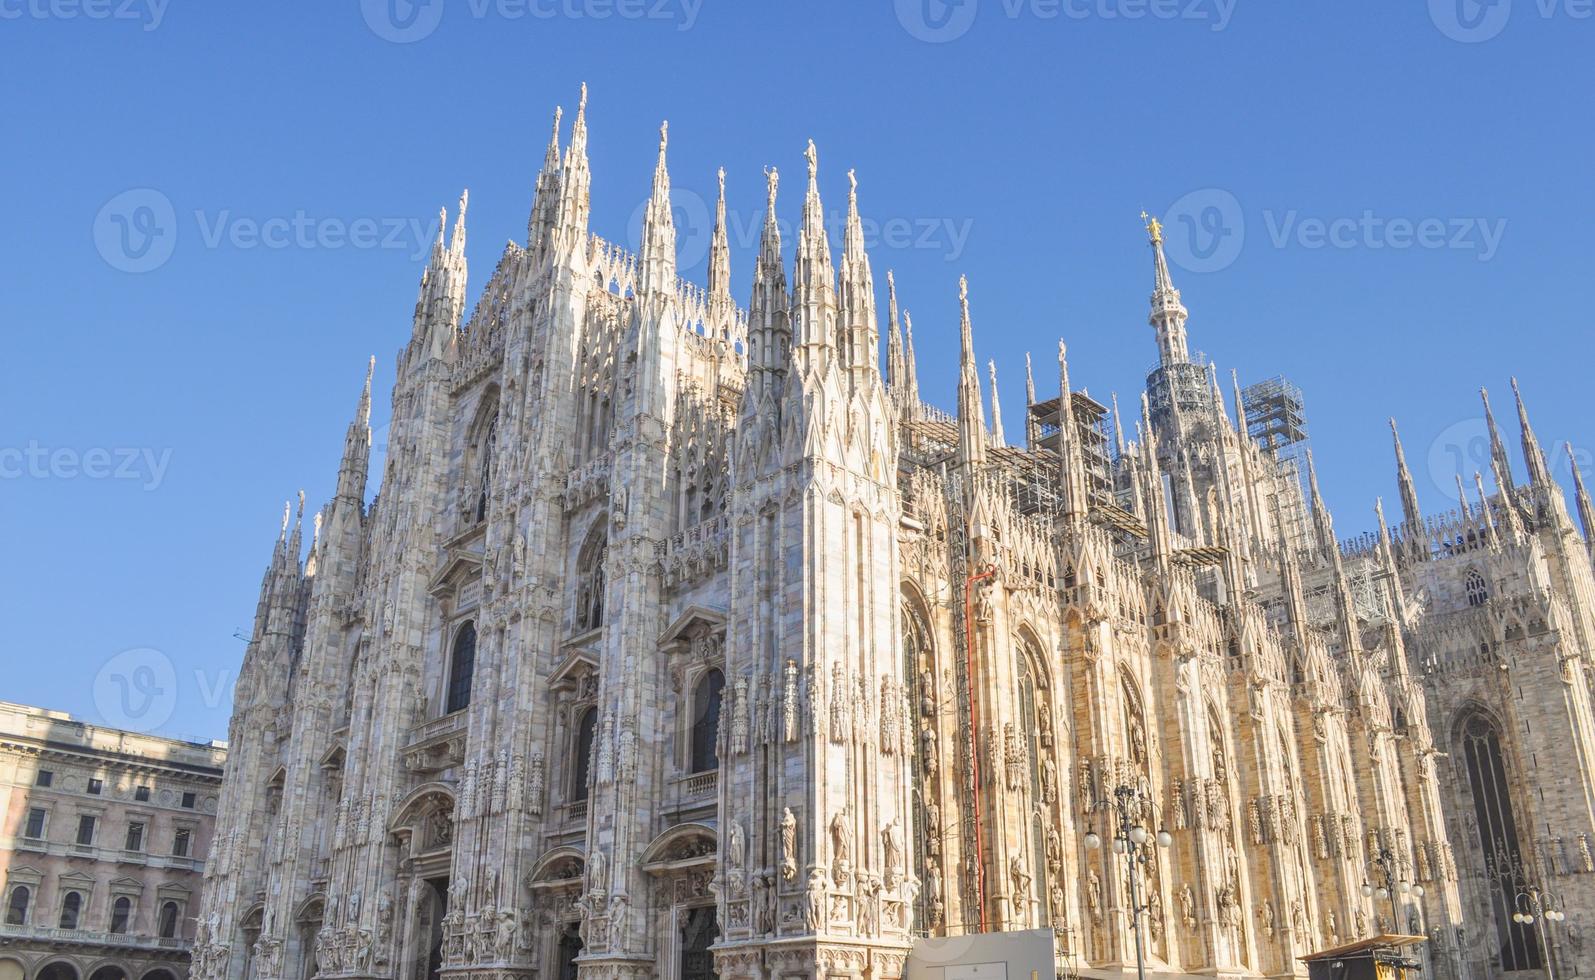 Duomo di Milano gothic cathedral church Milan Italy photo